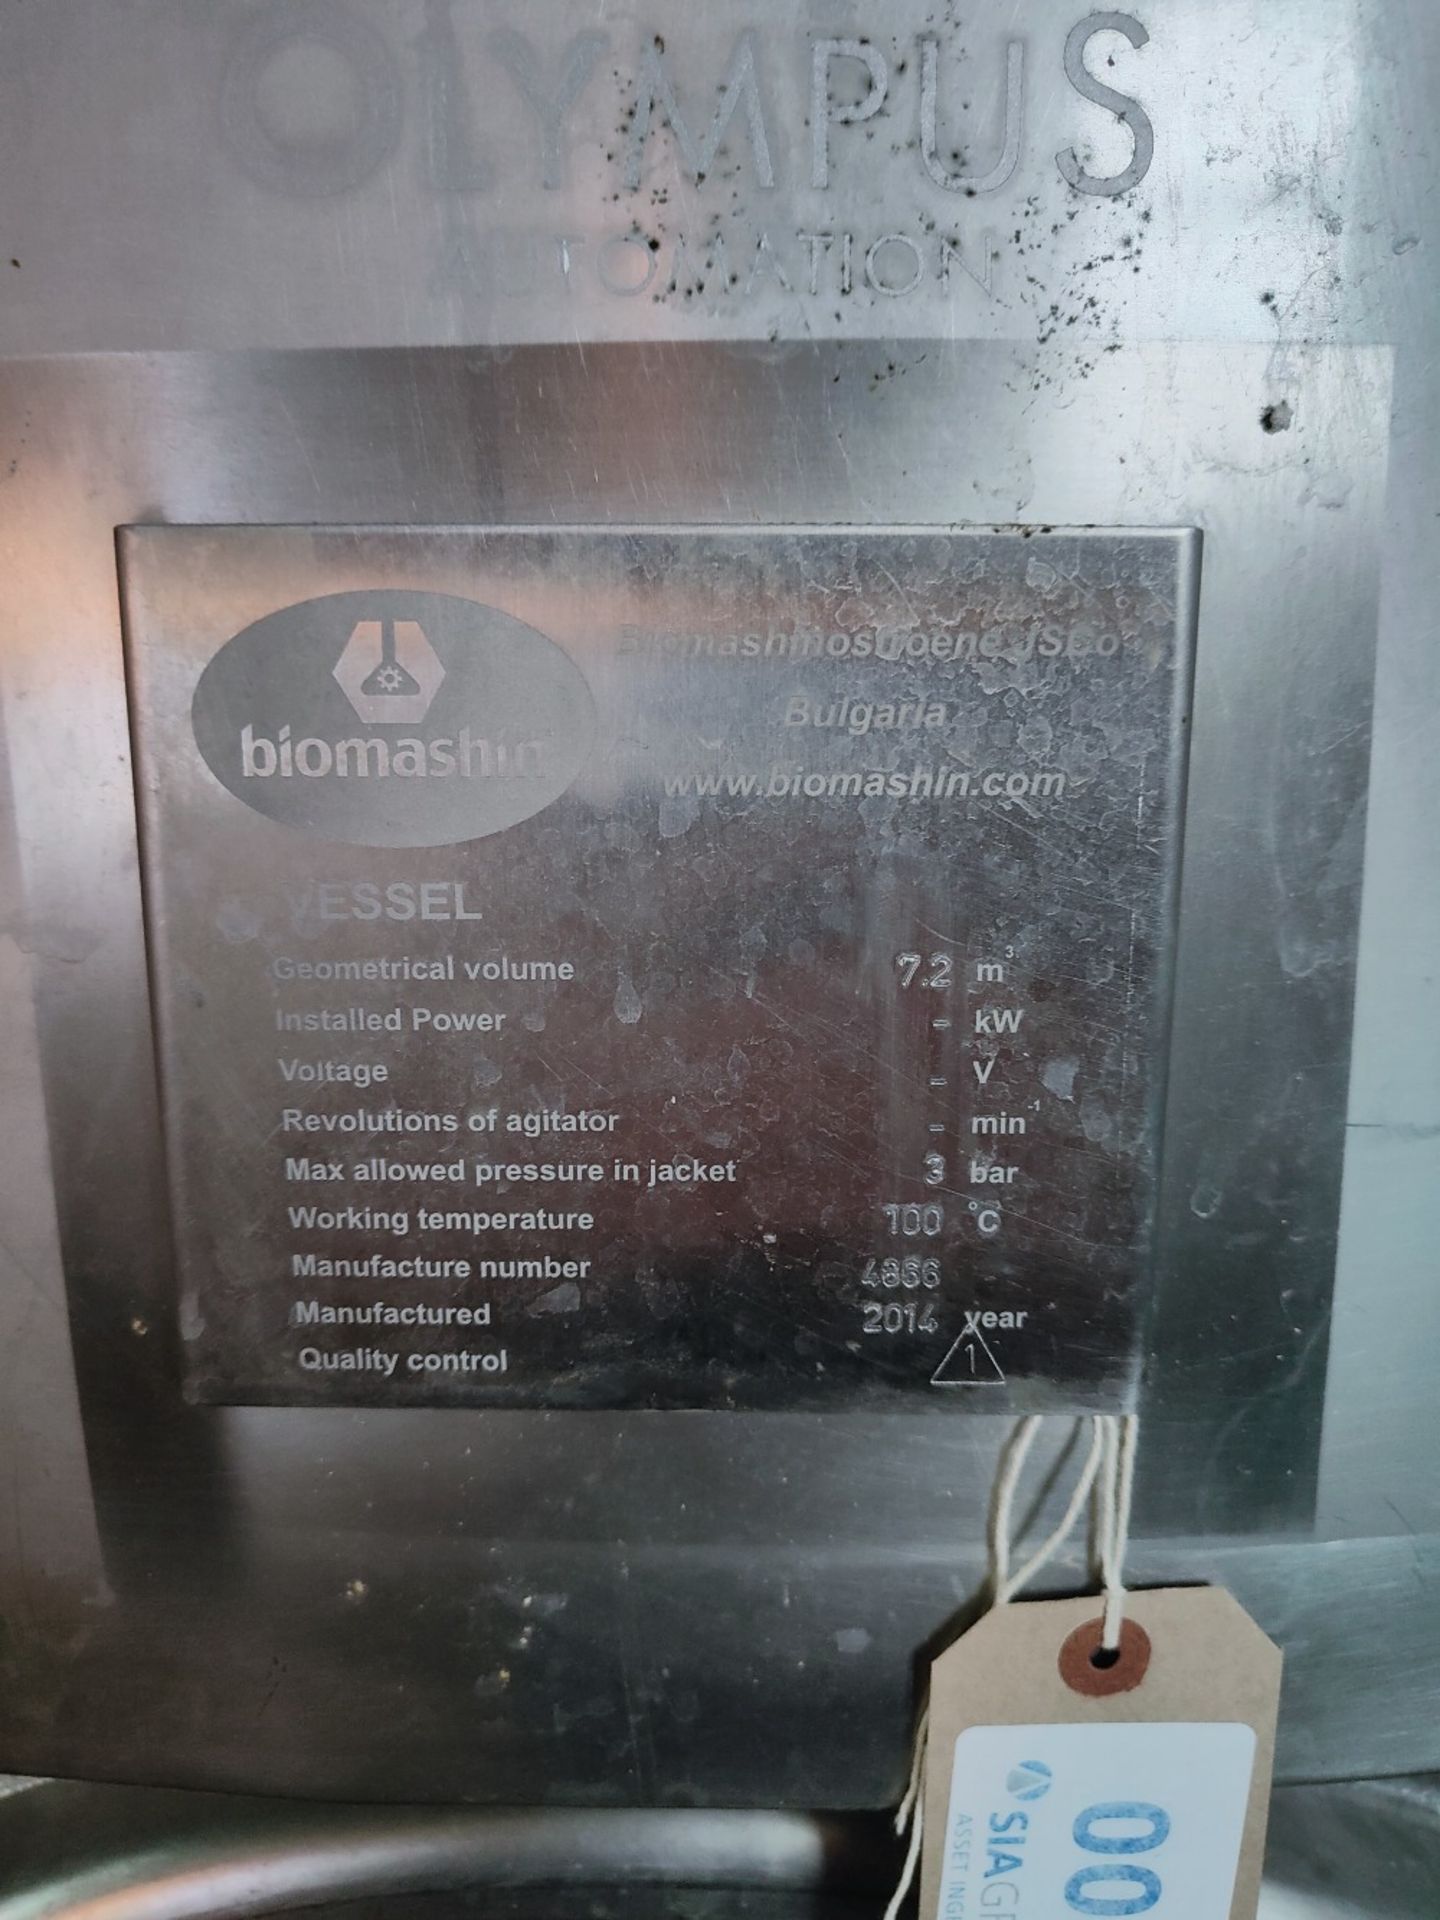 (2014) Biomashinostroene Jsco, Bulgaria, Olympus Automation Brew System - Image 10 of 22